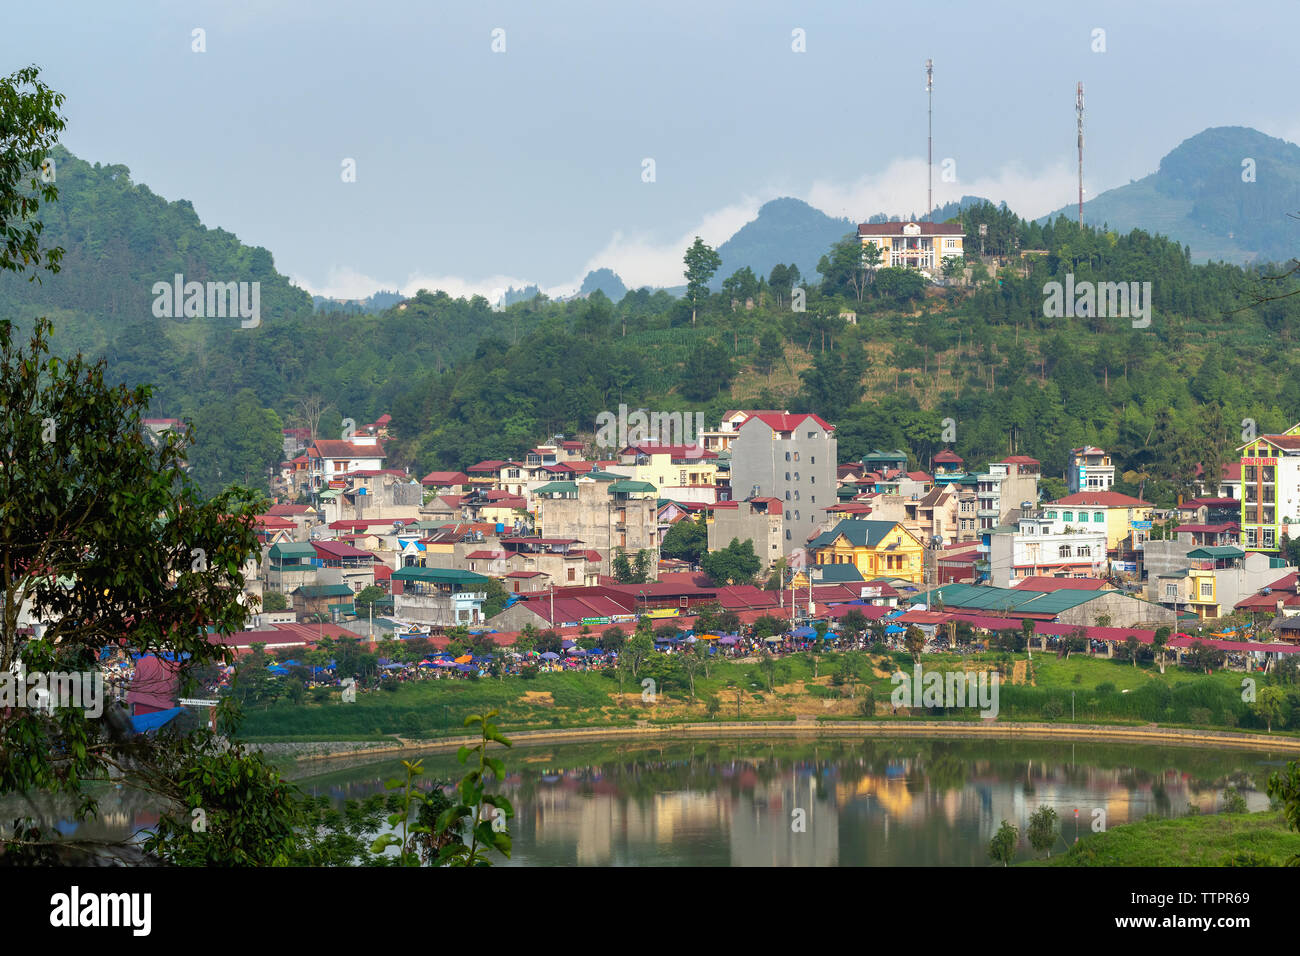 Downtown buildings of Bac Ha, Lao Cai Province, Vietnam, Asia, Stock Photo